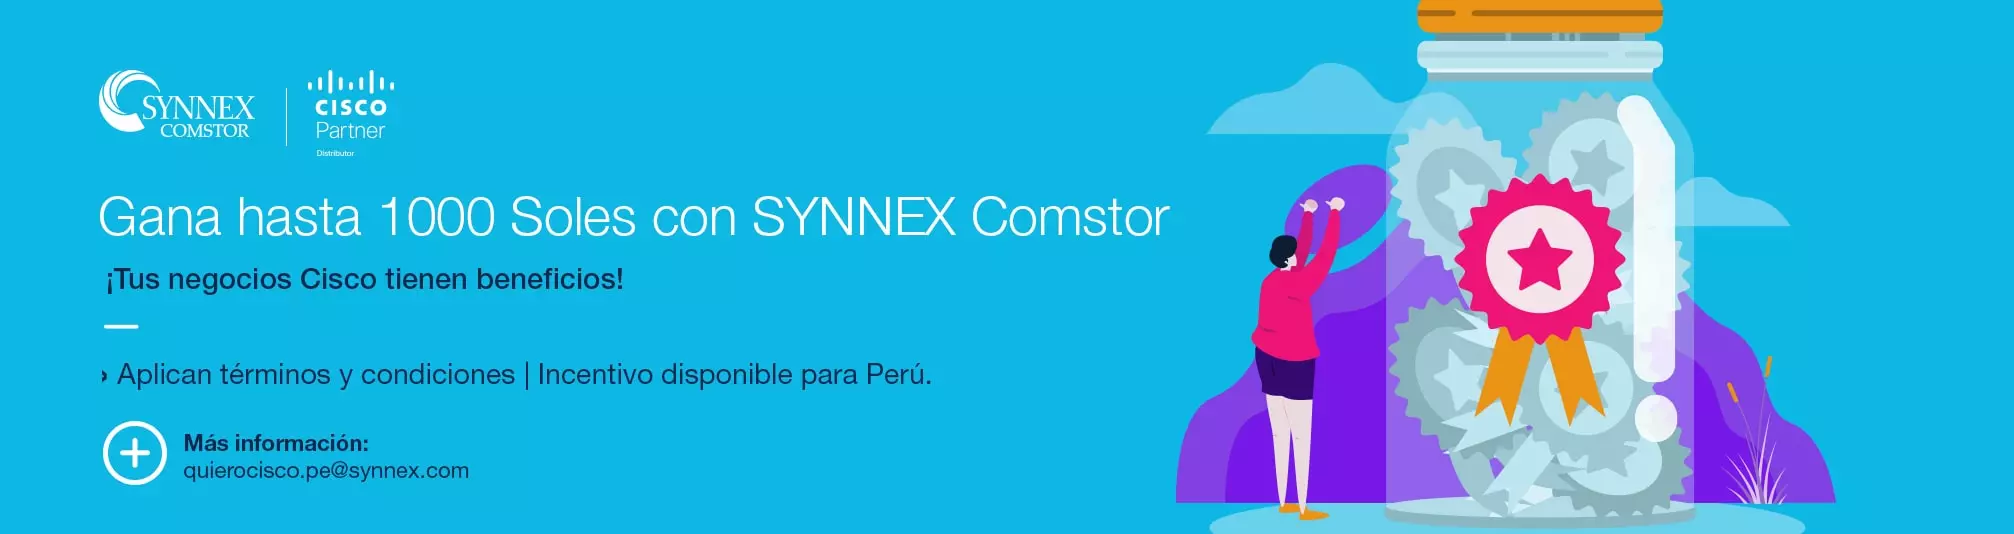 SYNNEX Comstor Express Peru - gana hasta 1000 soles con comstor